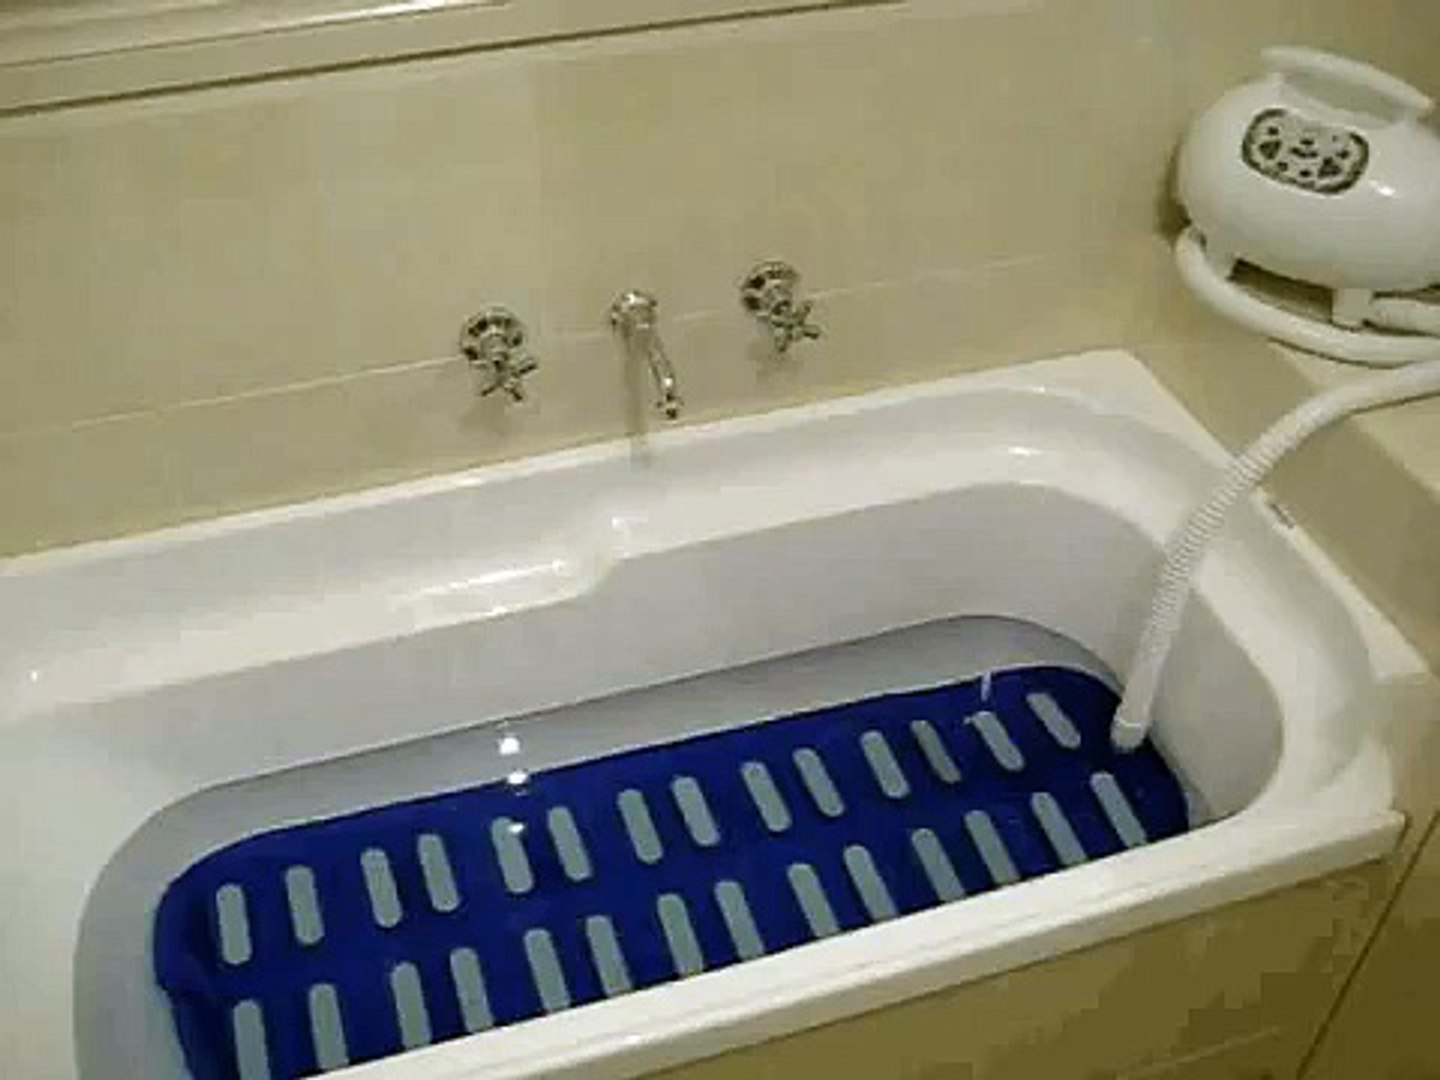 Conair Bathtub Bubble Massage Jacuzzi Mat - household items - by